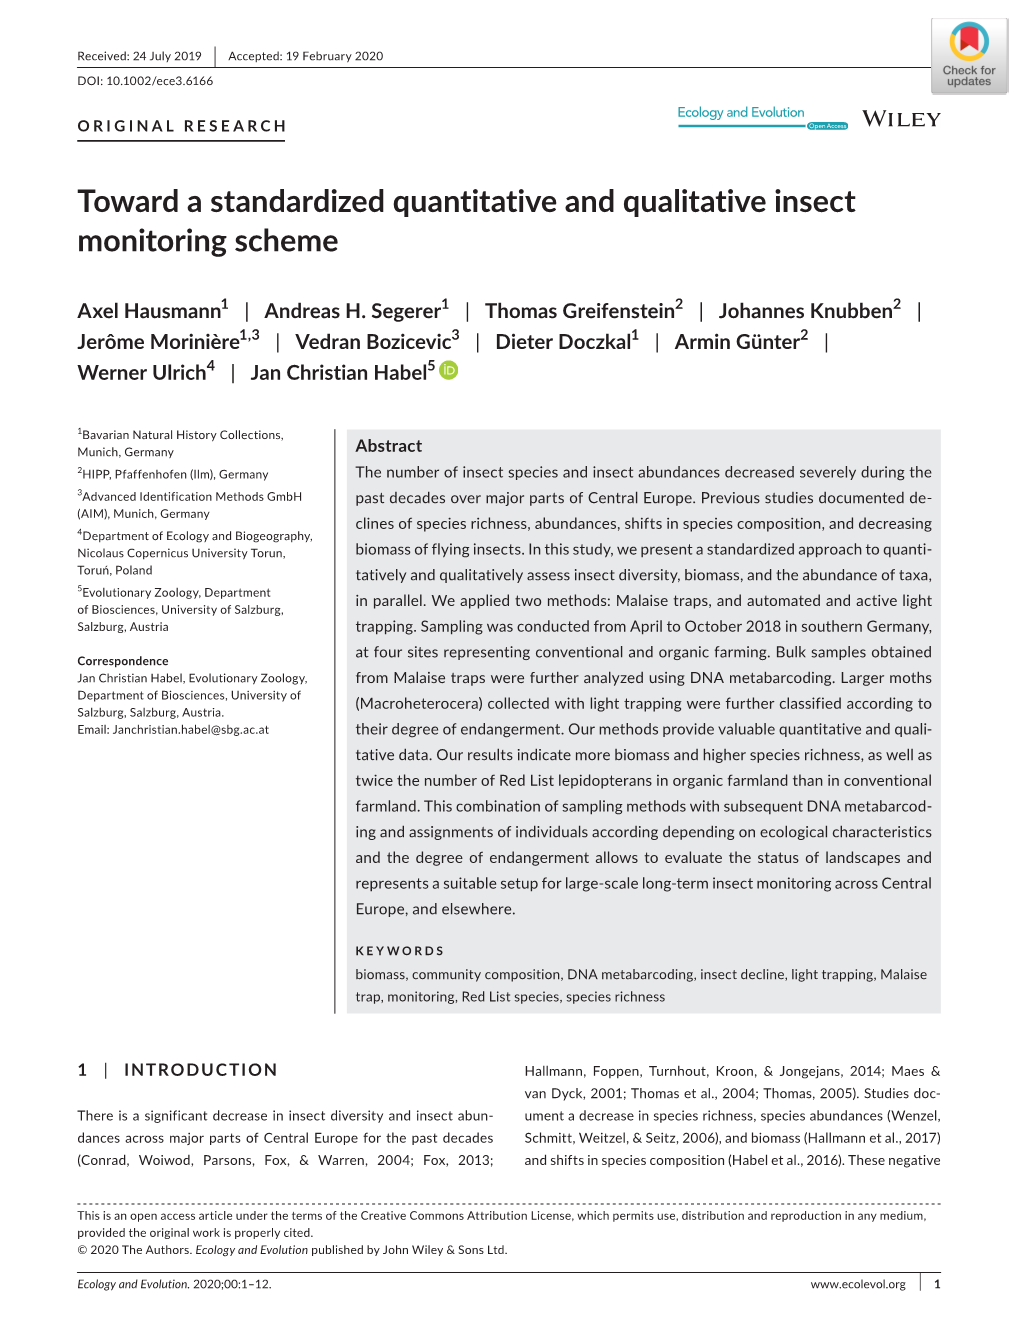 Toward a Standardized Quantitative and Qualitative Insect Monitoring Scheme